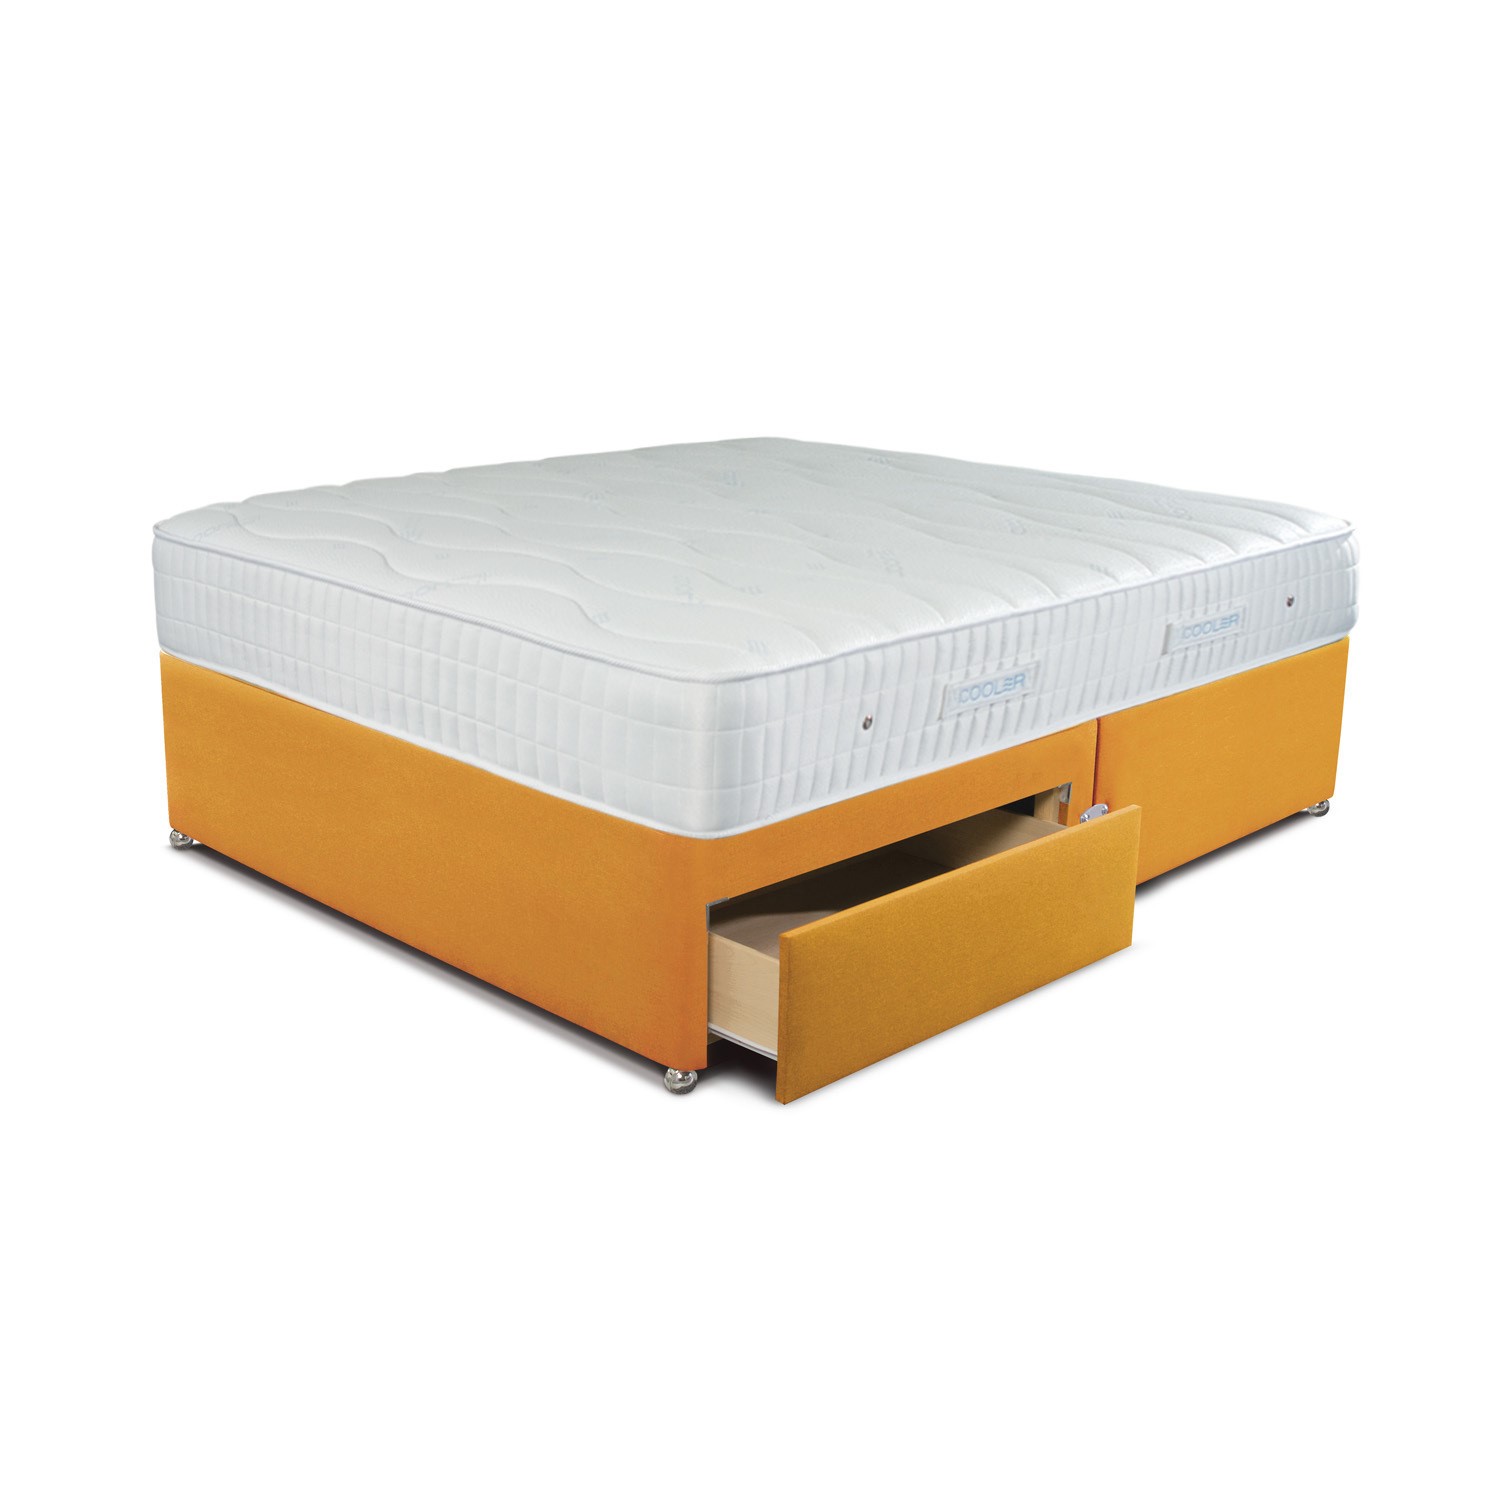 Photo of Sleepeezee king size 2 drawer divan bed in tweed mustard with cooler pinnacle 1000 mattress